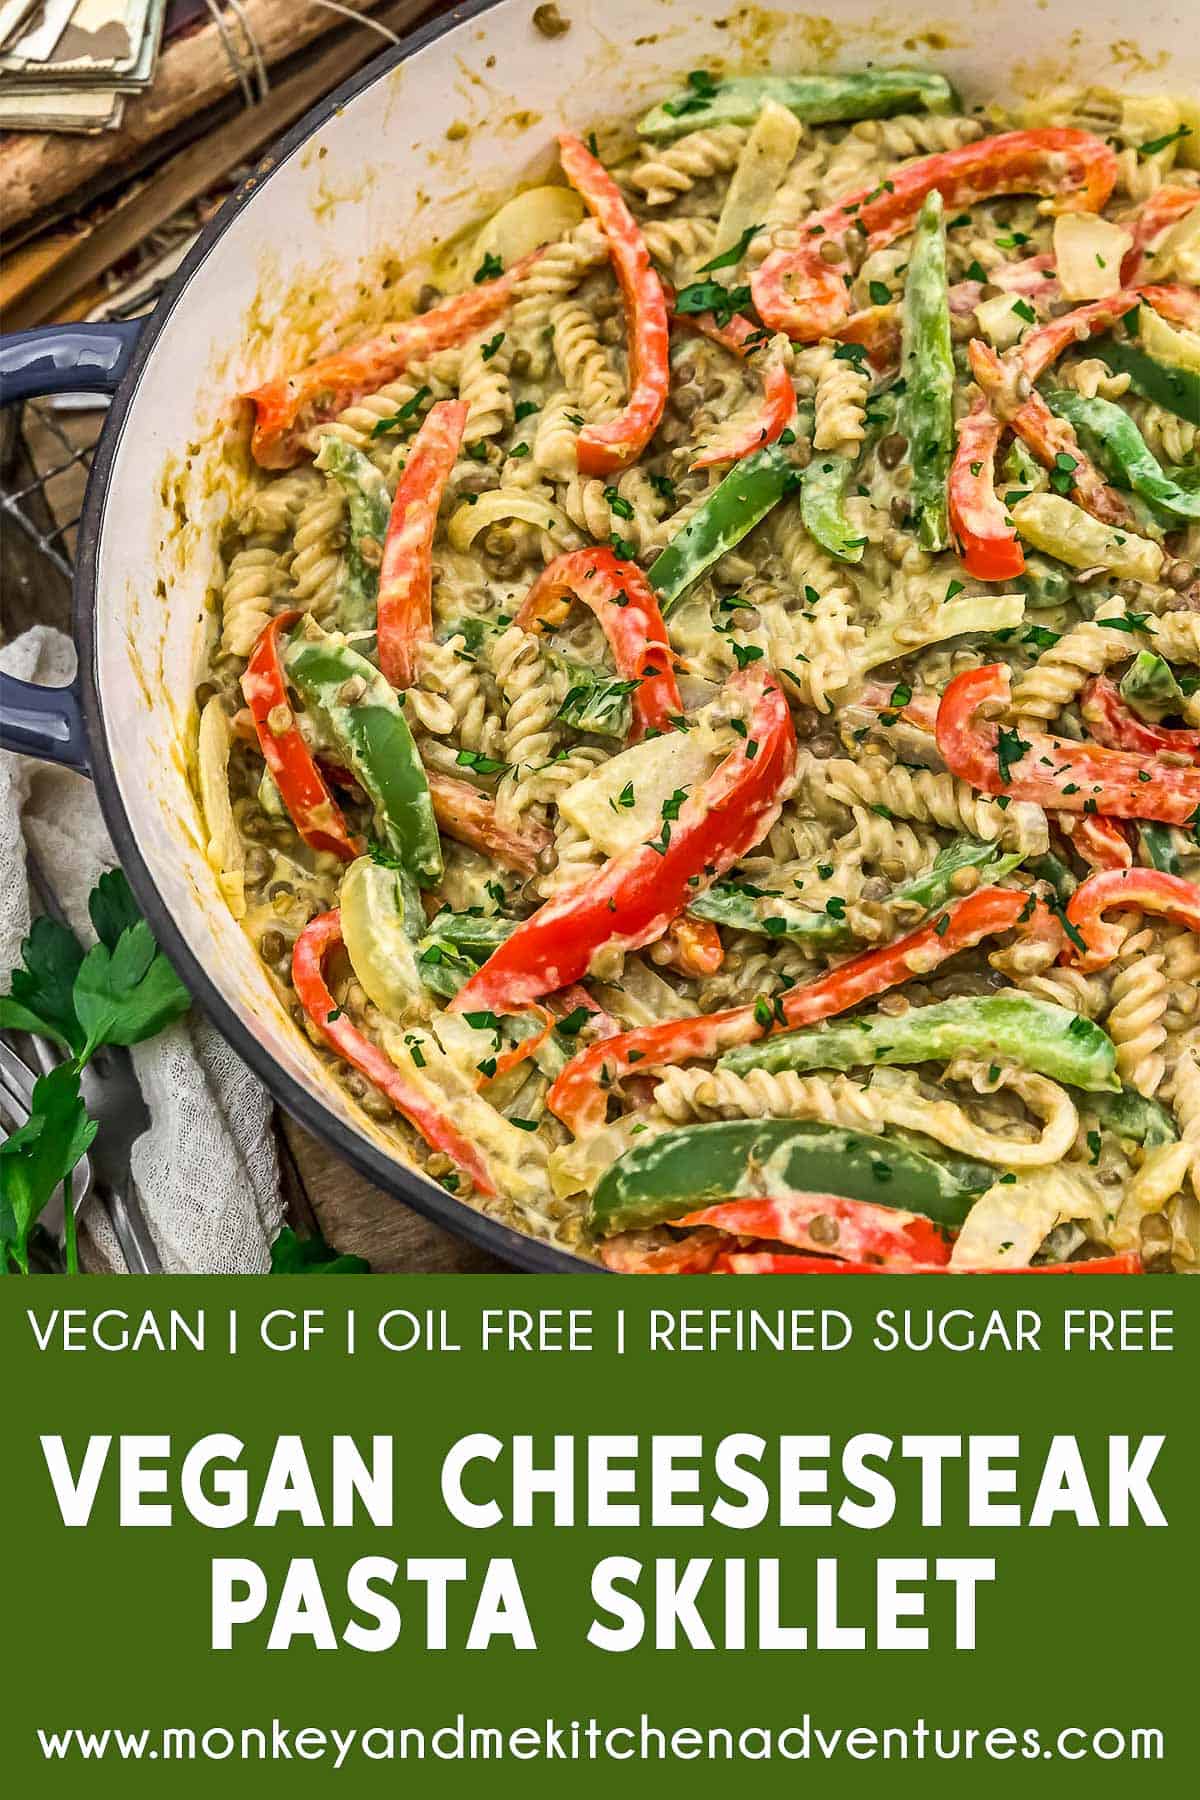 Vegan “Cheesesteak” Pasta Skillet with text description